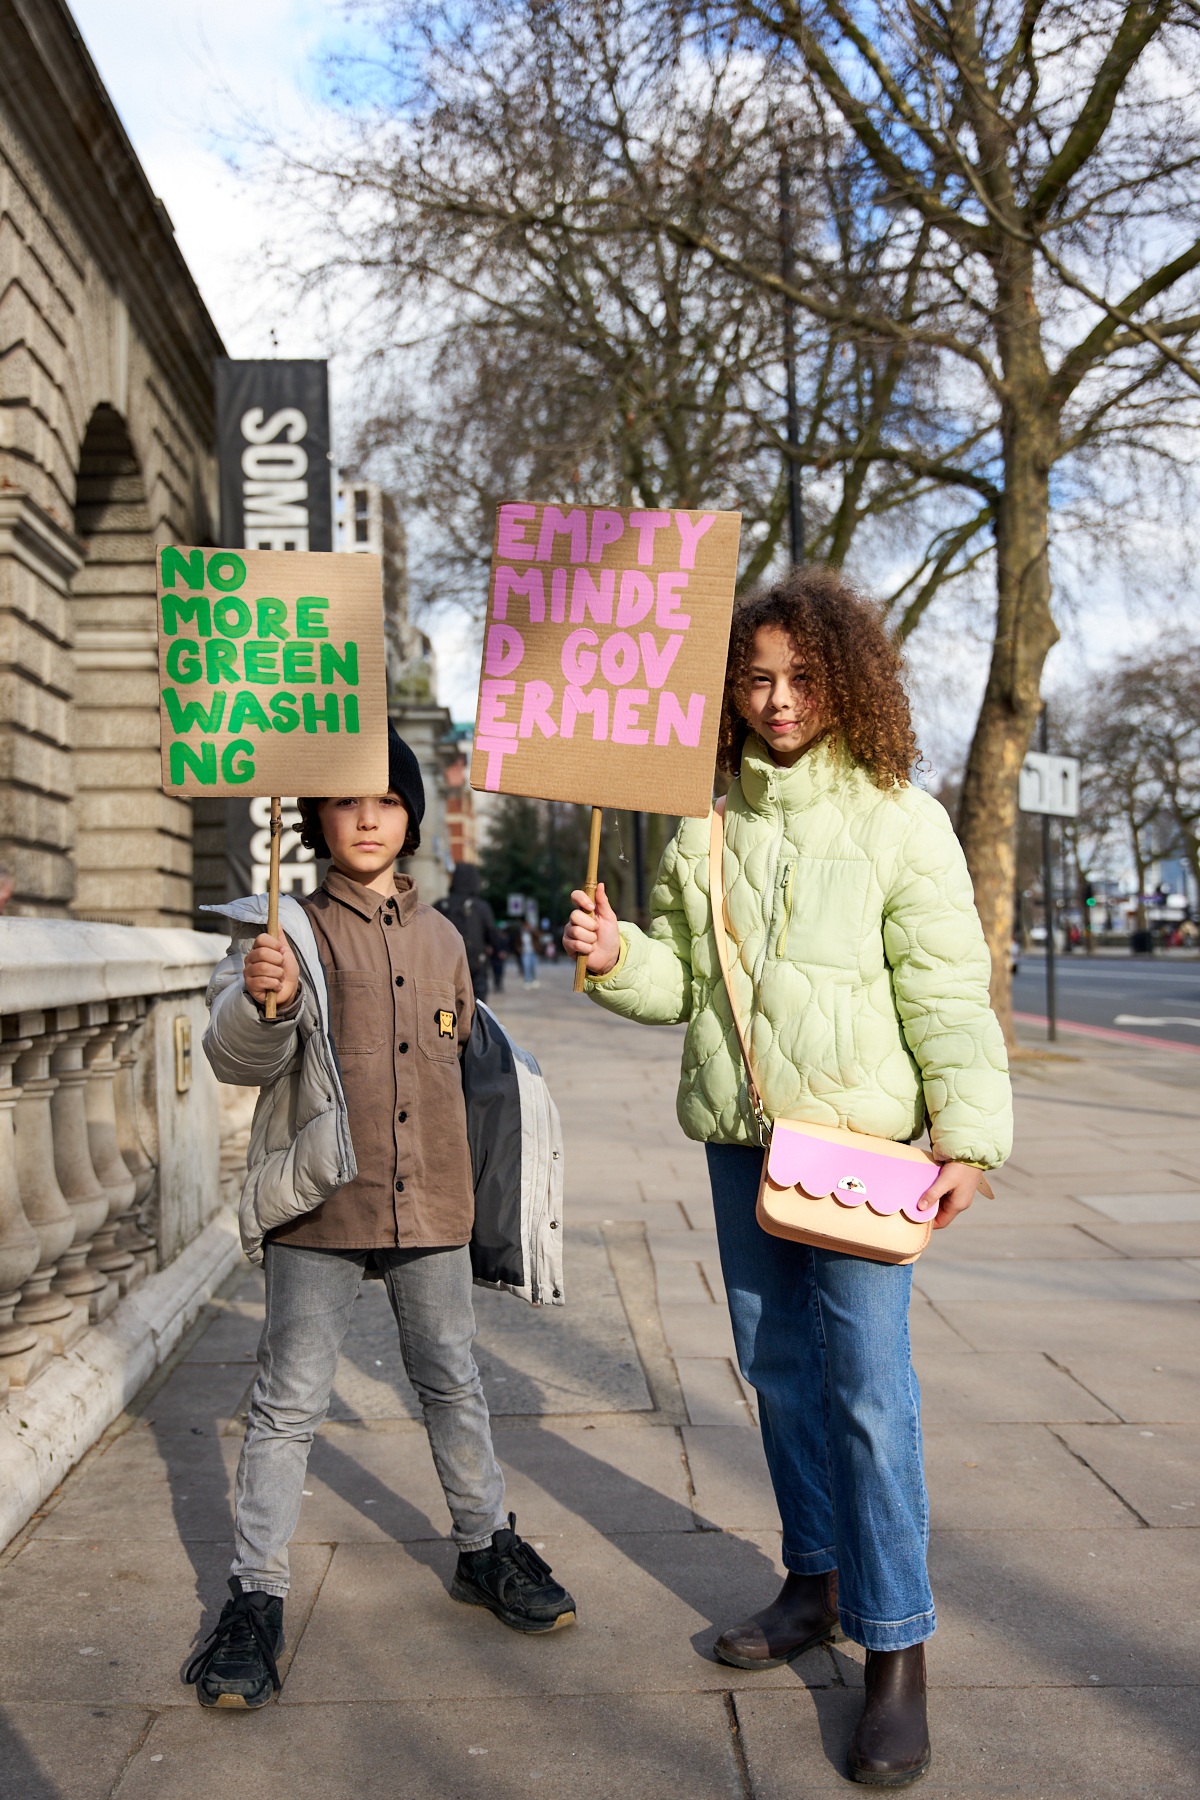 sign painting studio artist Peter Liversidge Beano rebellion colours Somerset House London children workshop greenwashing goverment